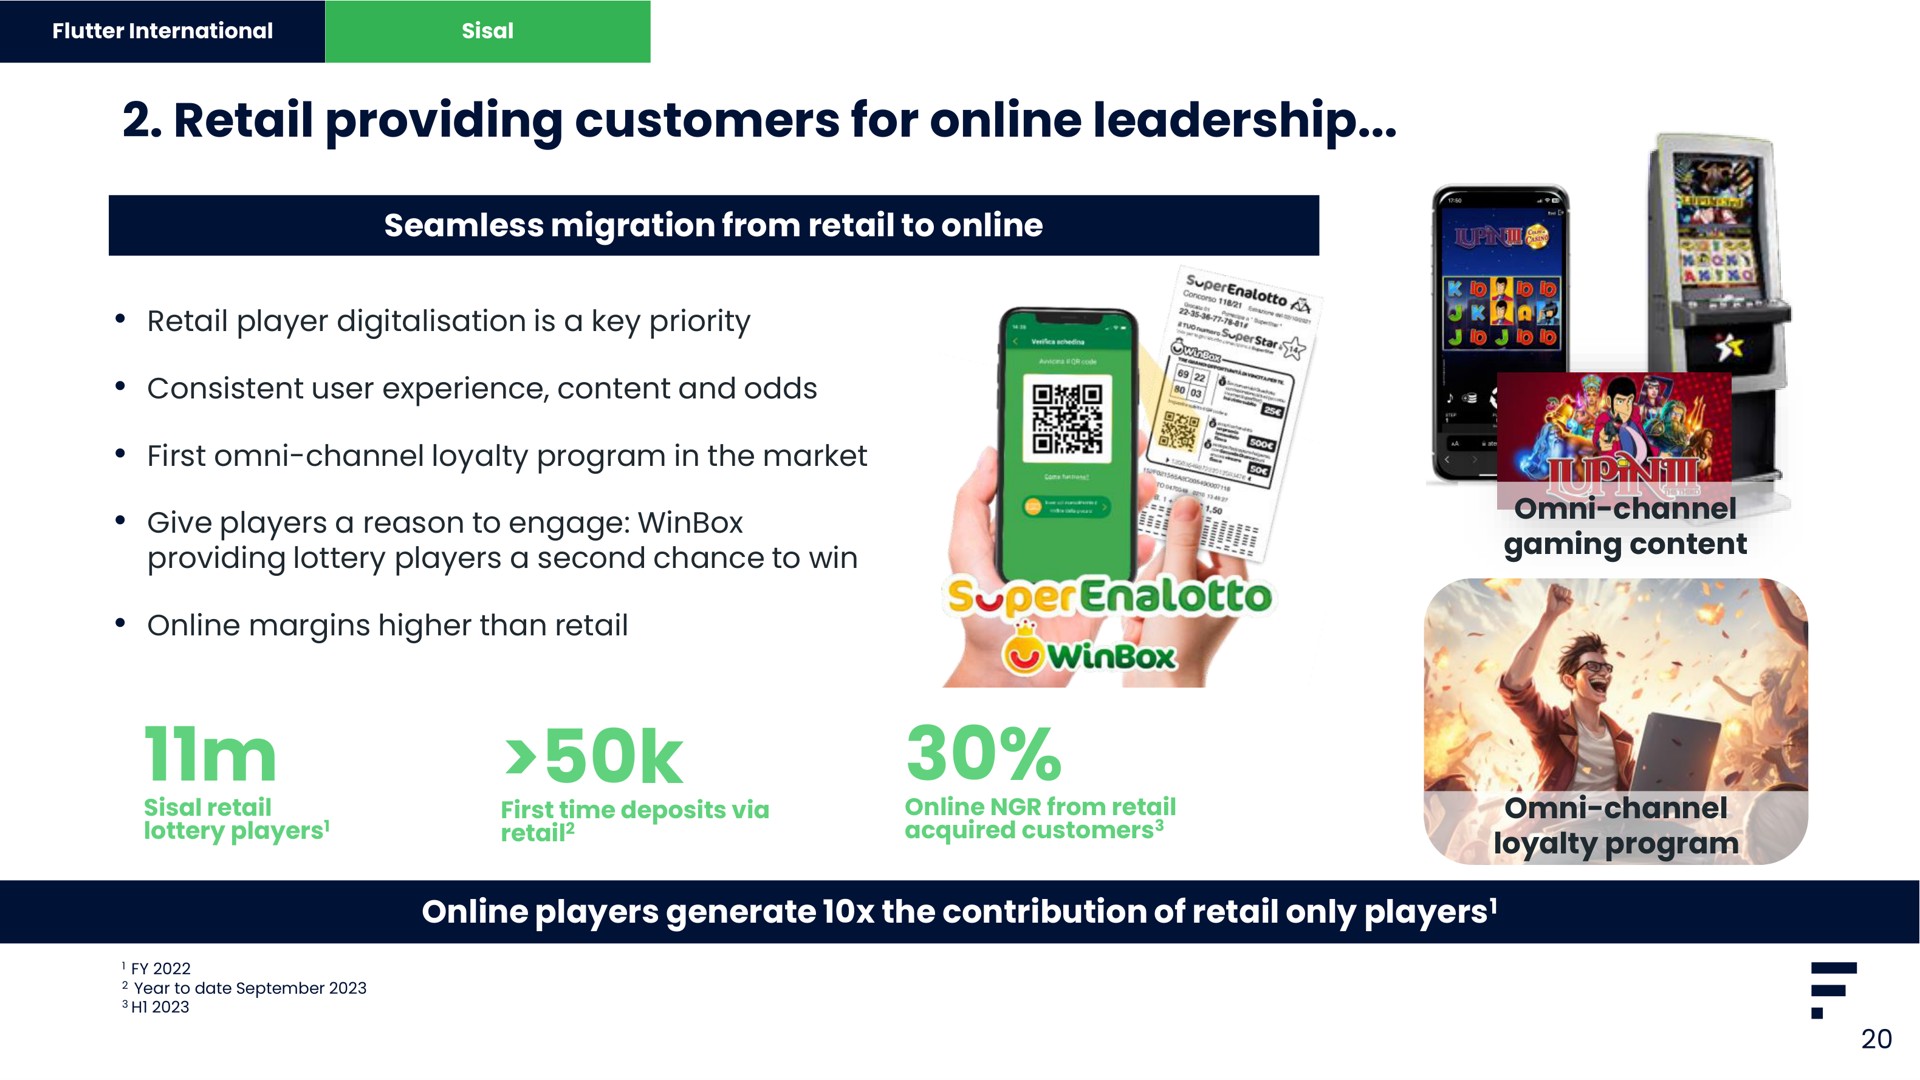 retail providing customers for leadership | Flutter